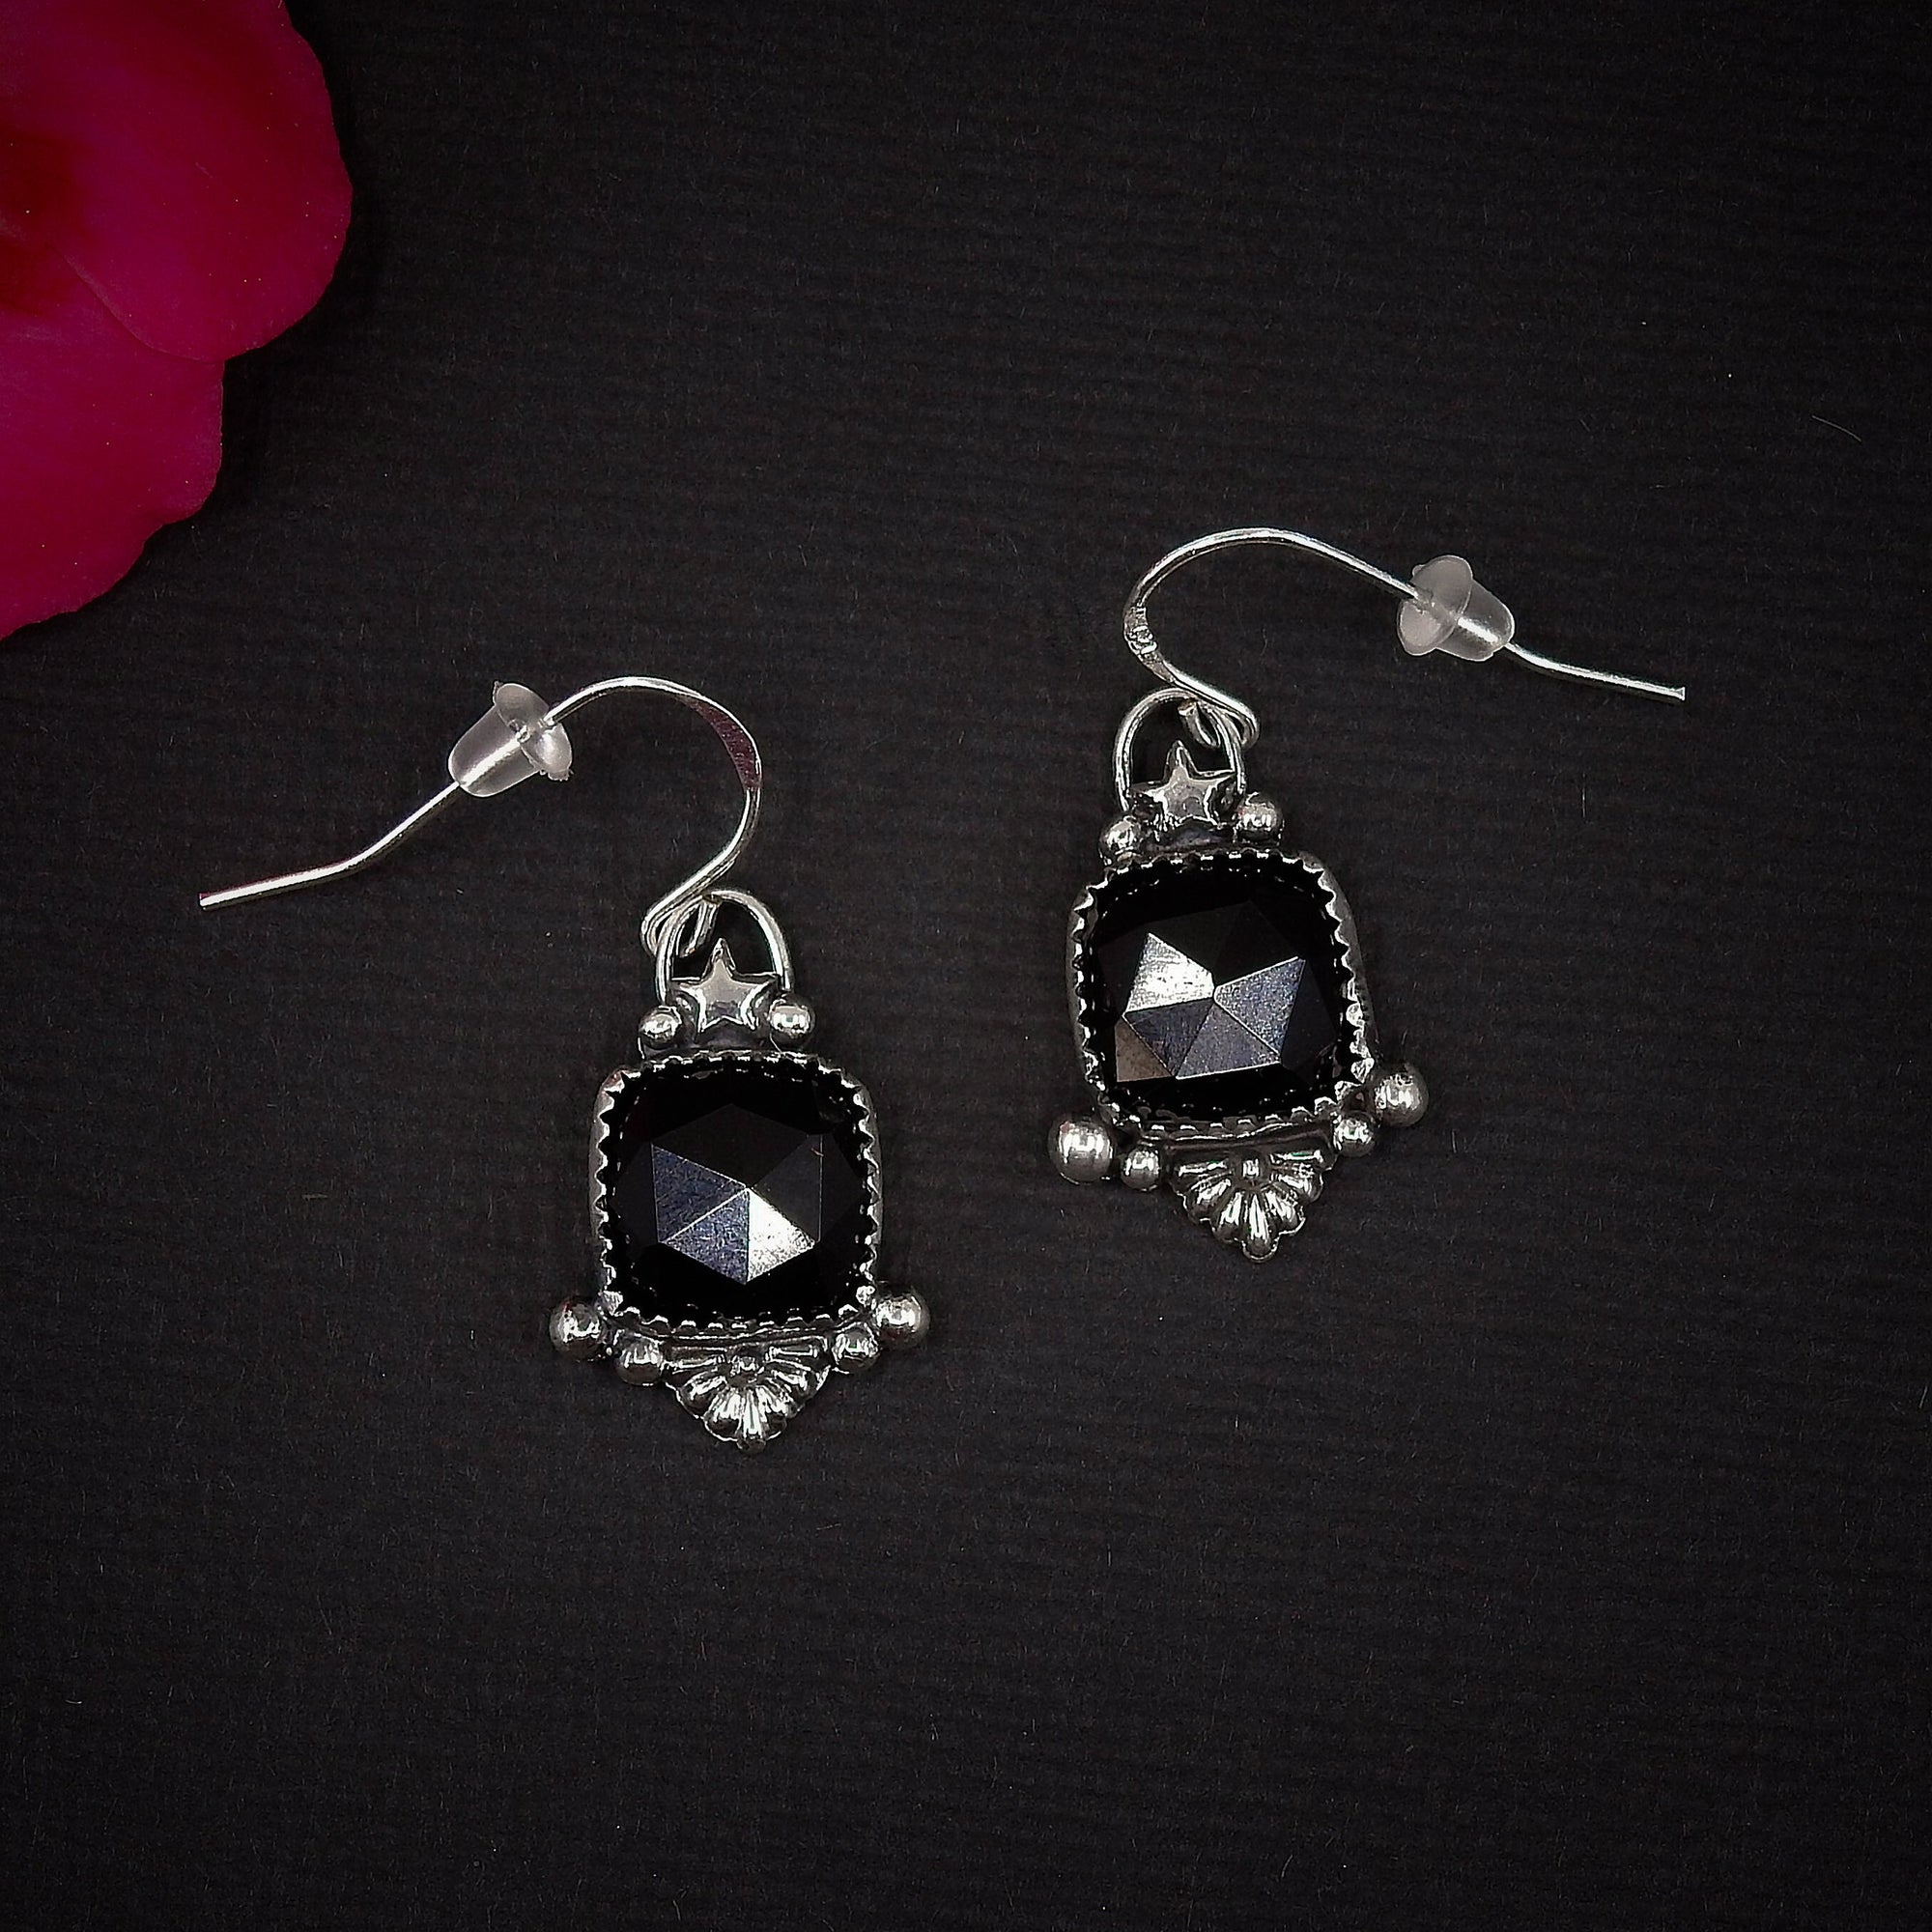 Rose Cut Black Onyx Earrings - Sterling Silver - Faceted Black Onyx Star Earrings - Square Black Onyx Gemstone Dangles, Black Stone Earrings